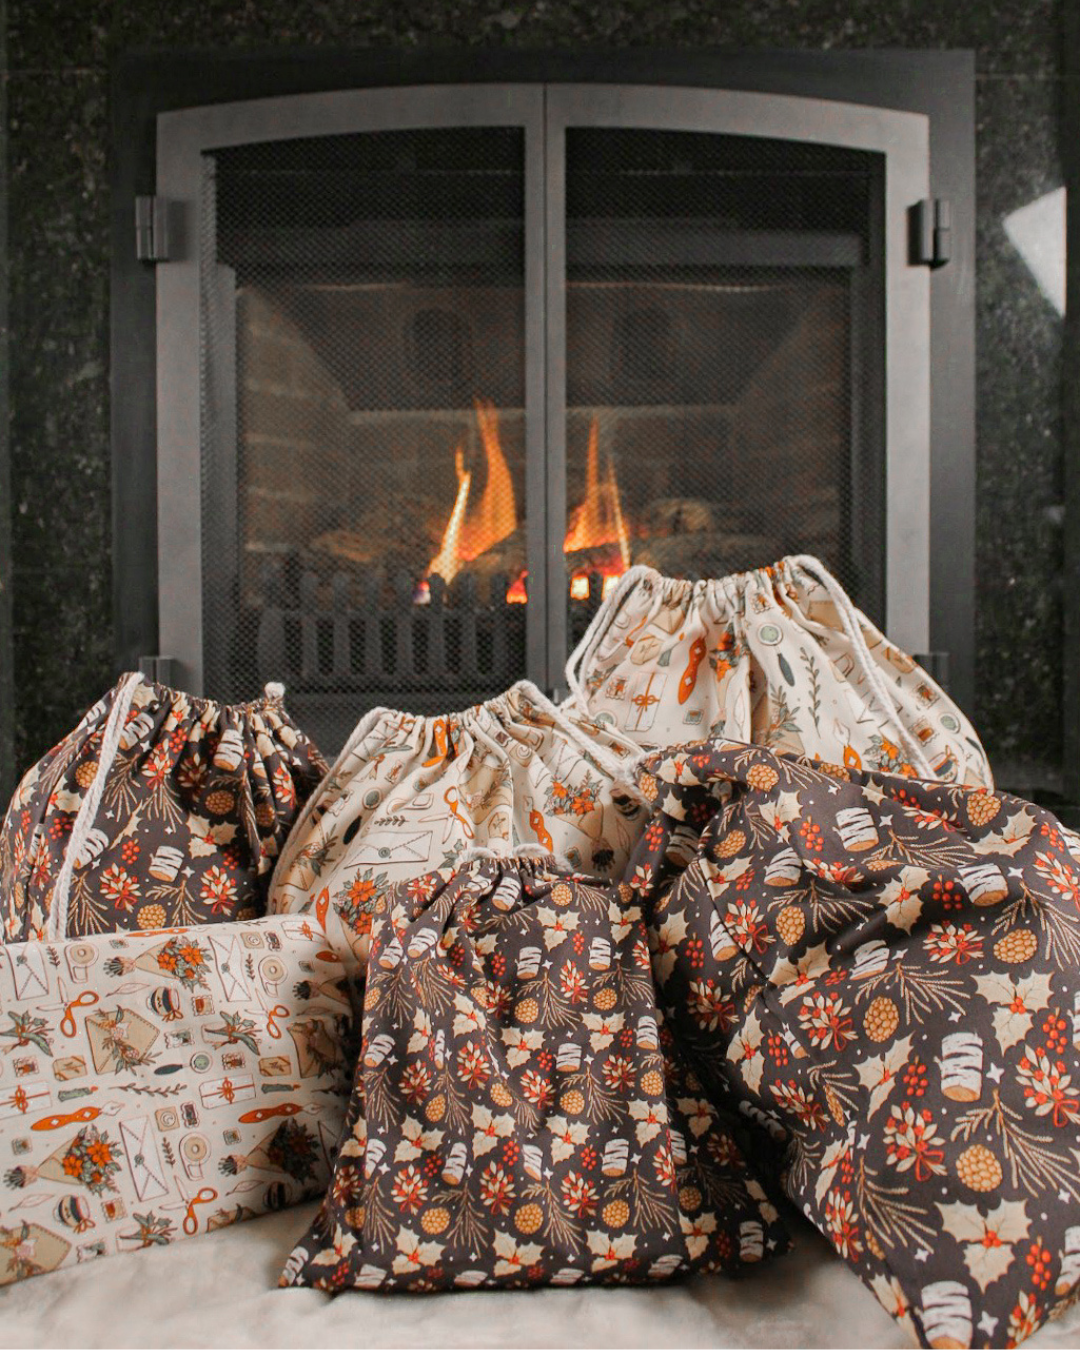 Winter Holiday | Drawstring Gift Bag Bundle [FINAL SALE]